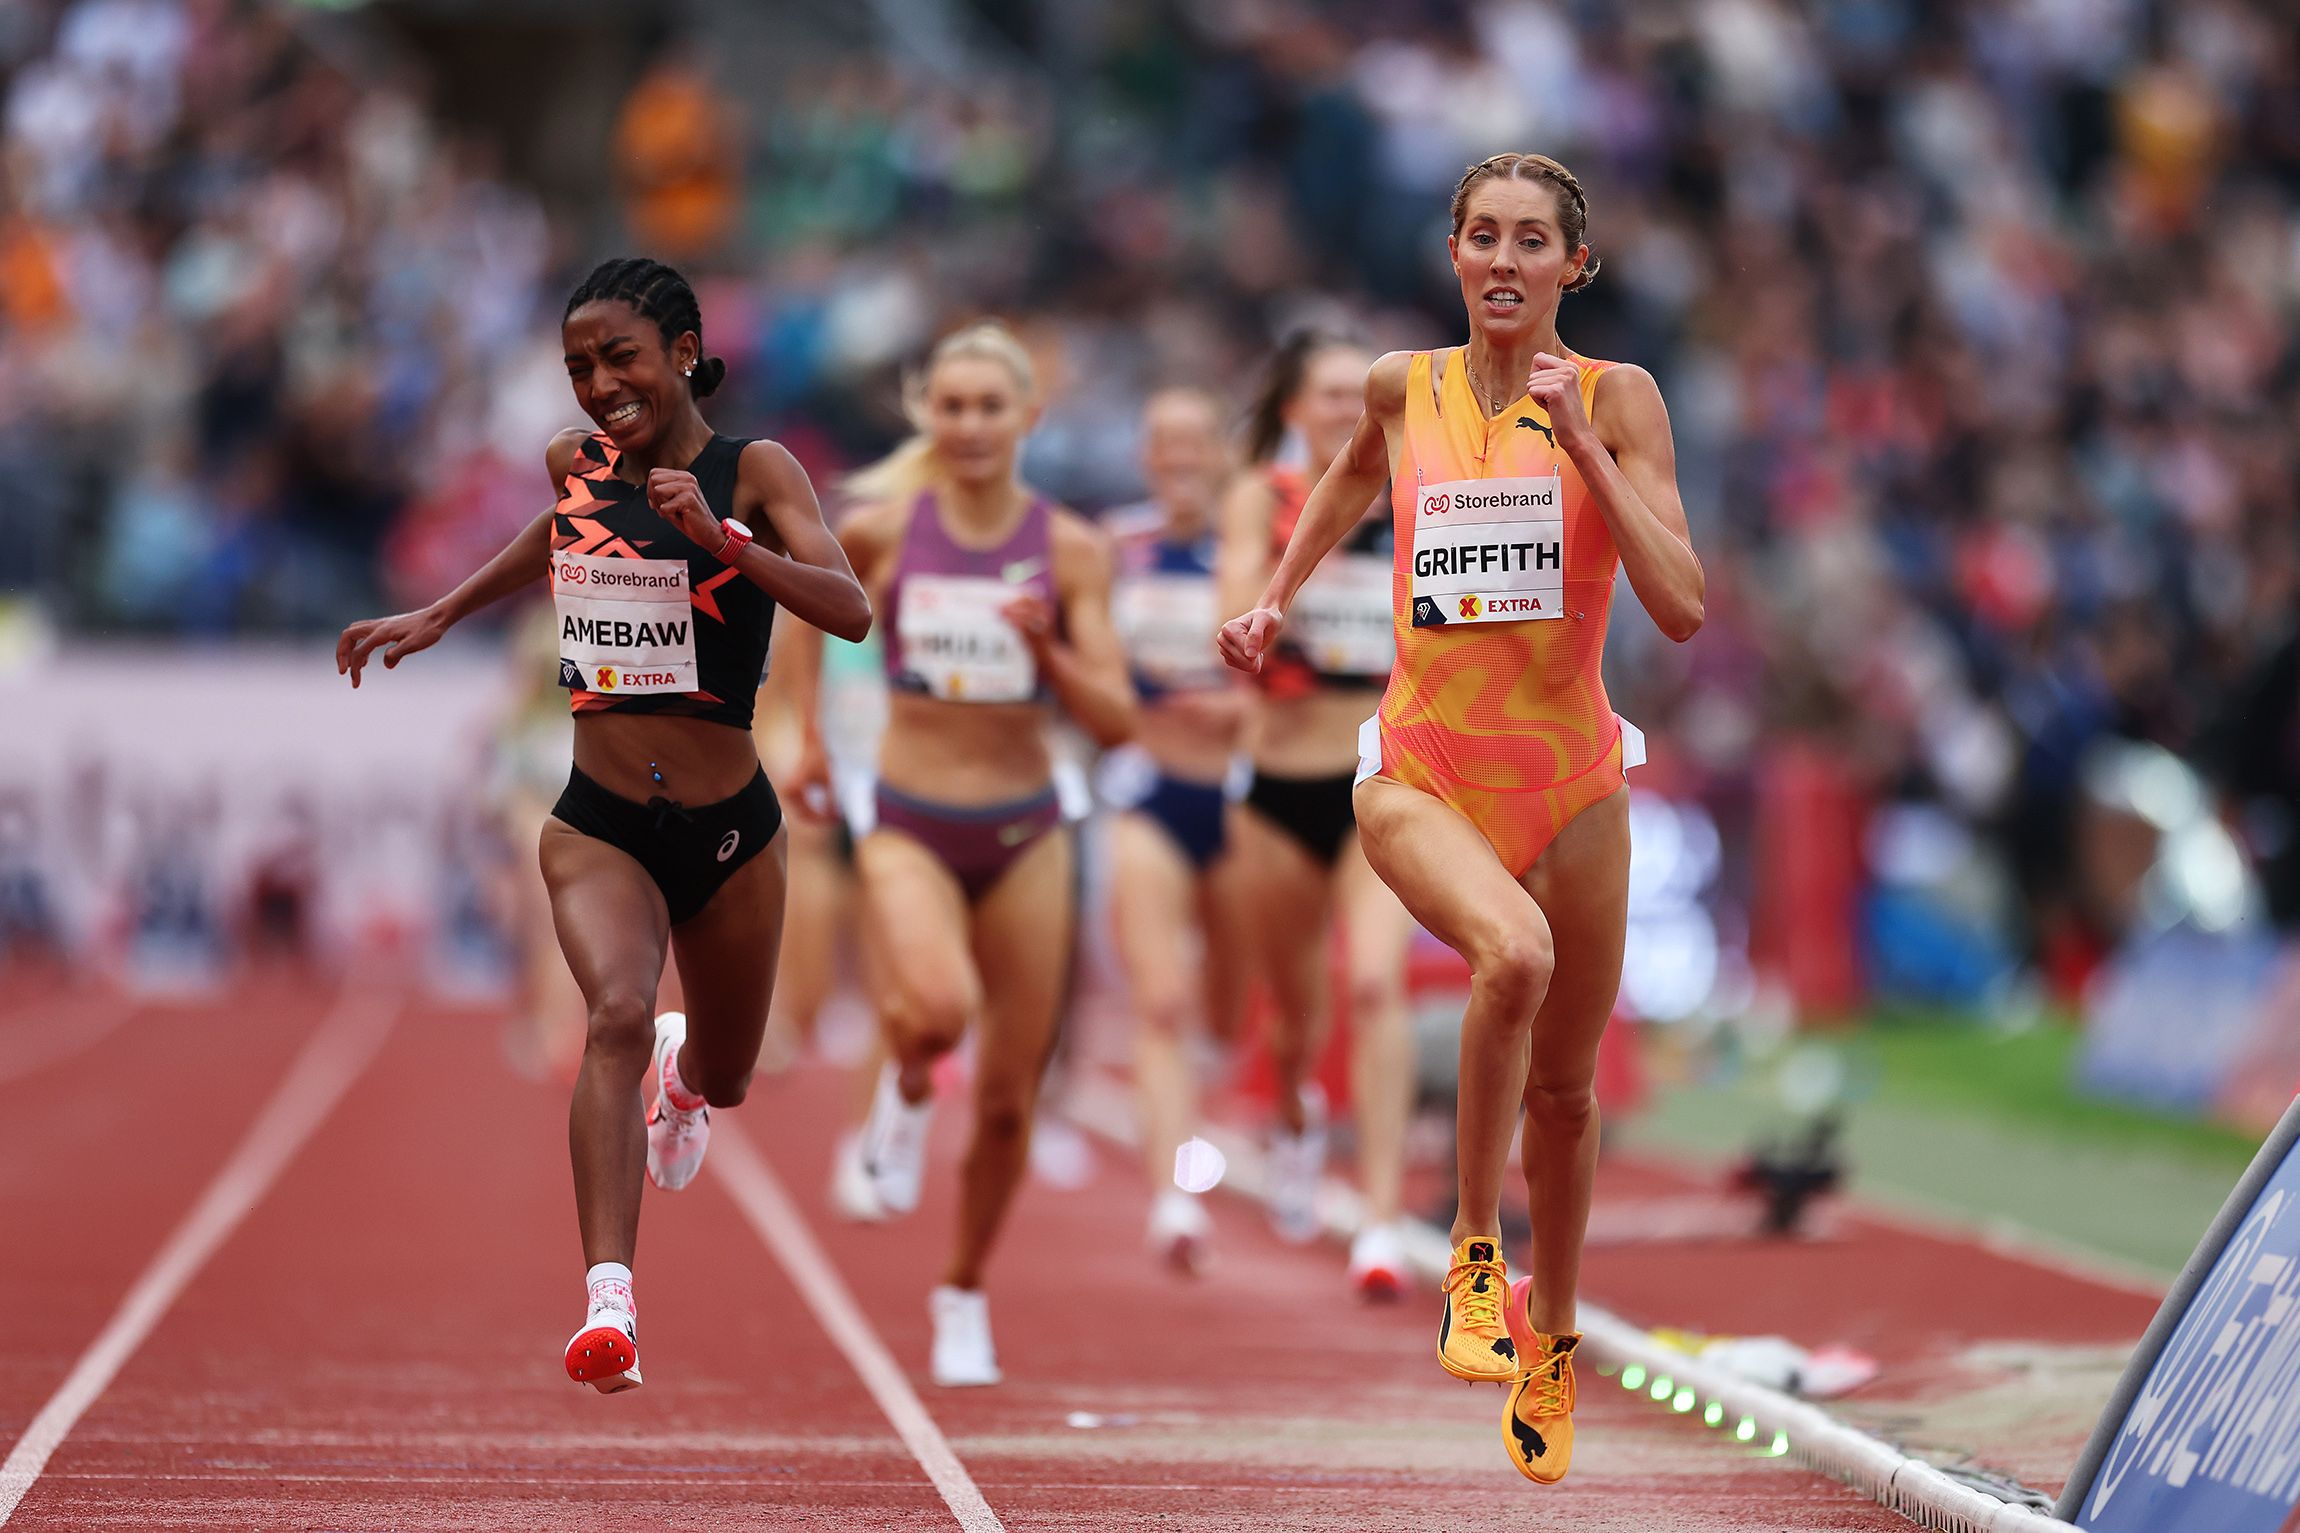 Georgia Griffith wins the 3000m in Oslo